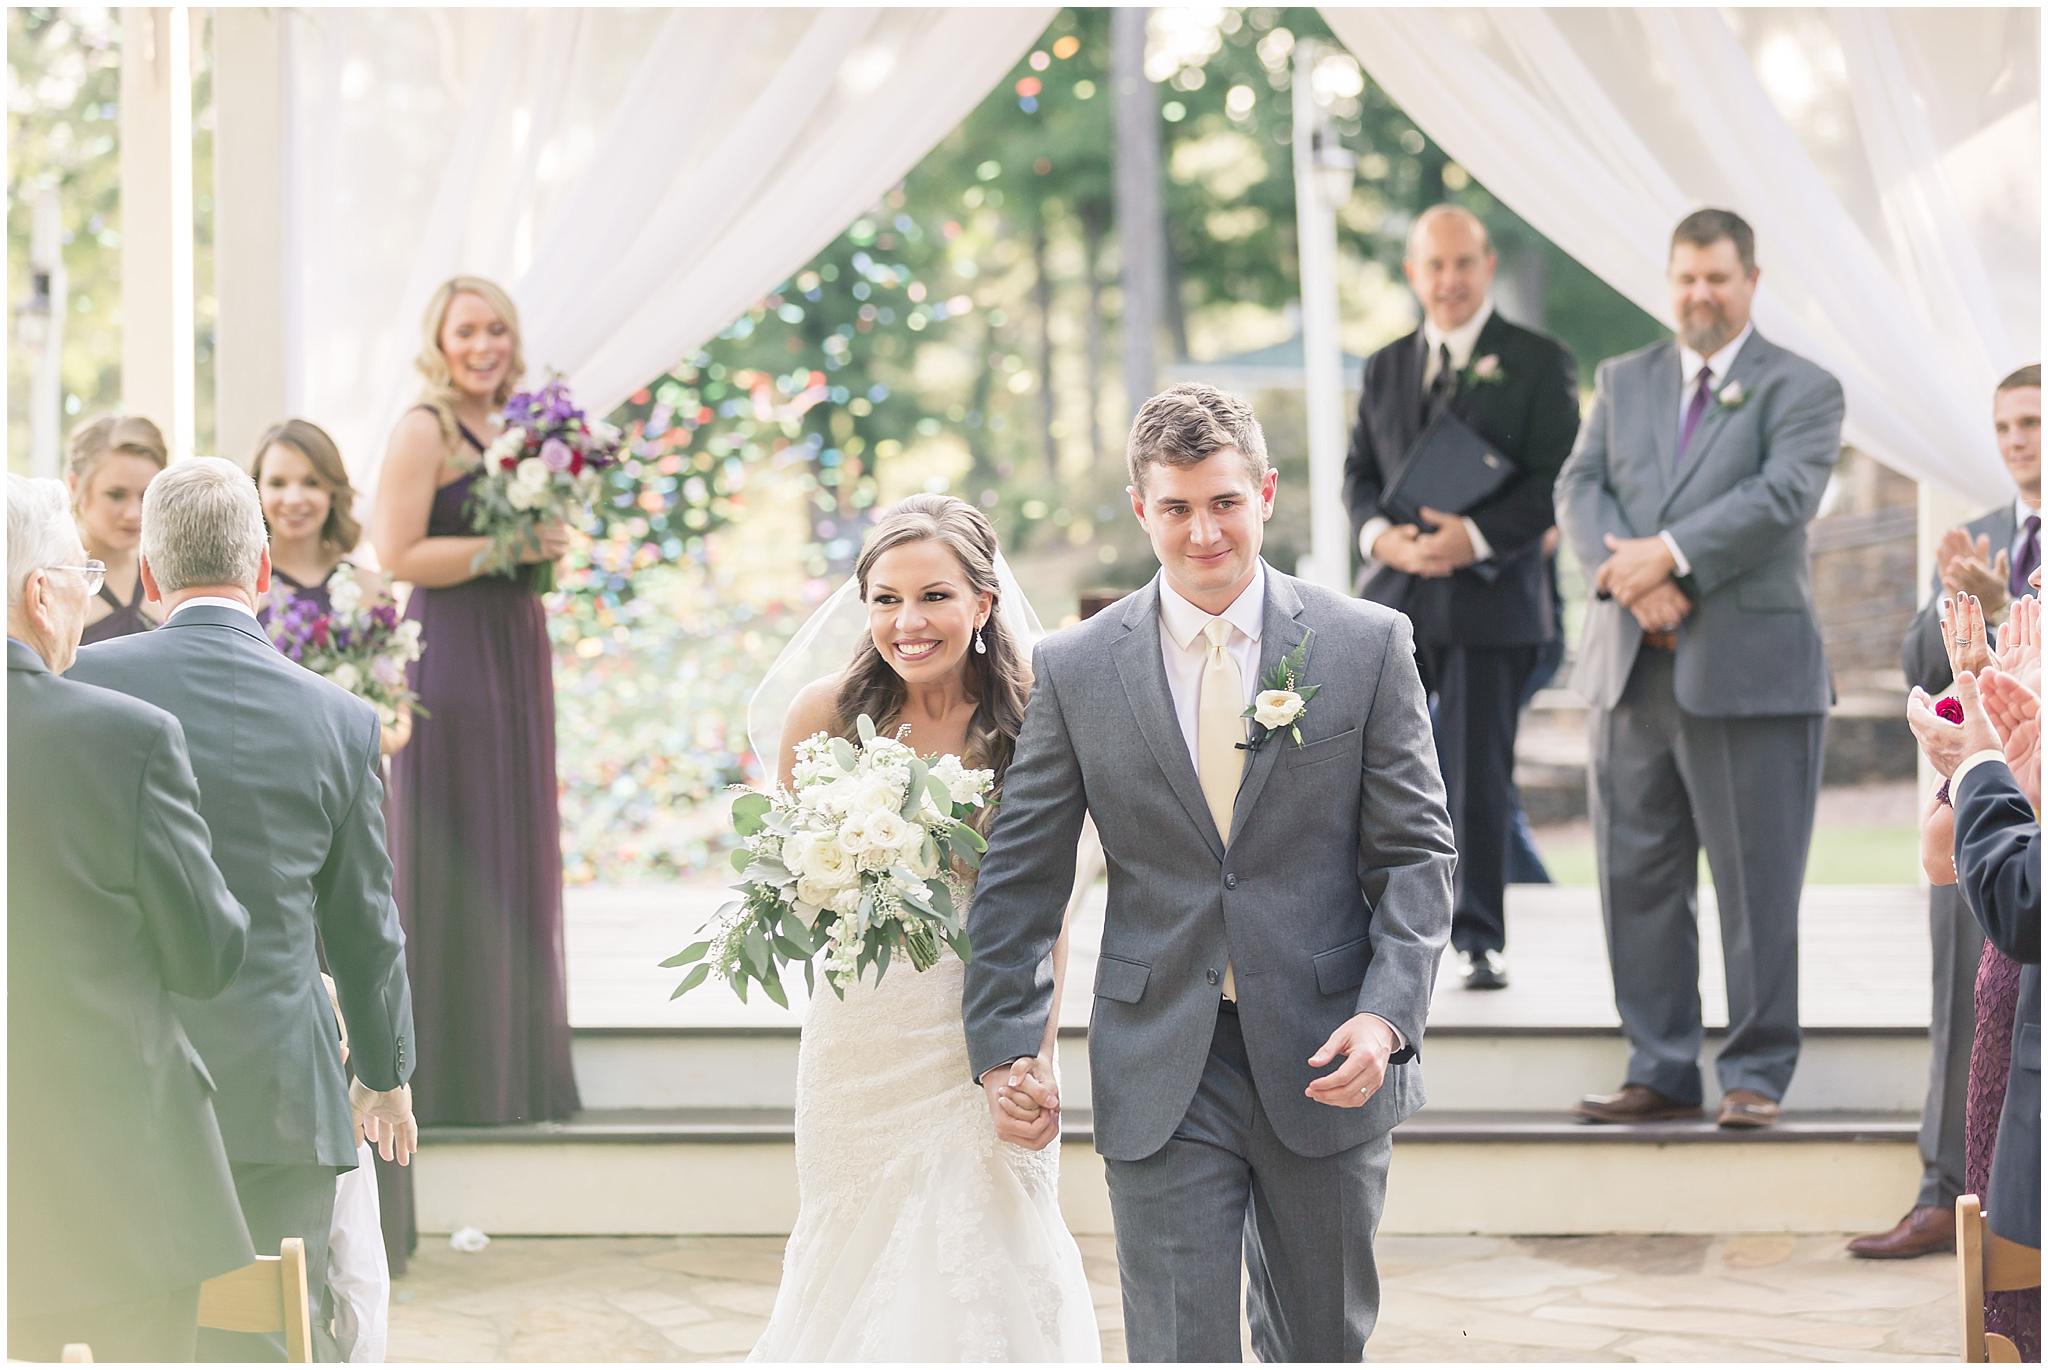 Little River Farms Wedding Pictures - Best Wedding Photographers in Alpharetta Georgia 